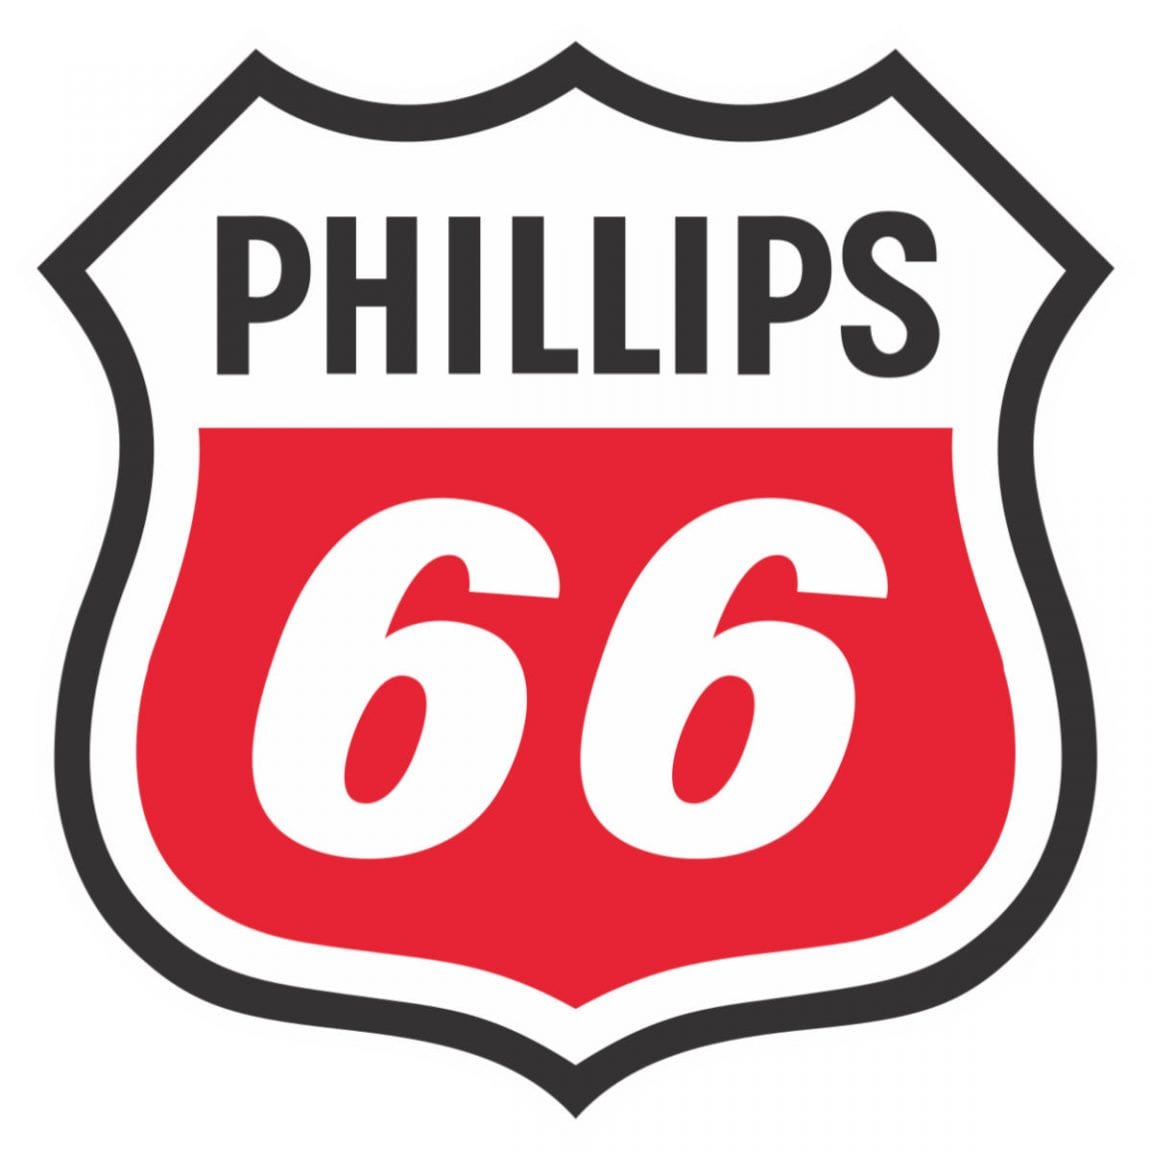 Phillips 66 Gift Card $90 (10% off) @ eBay